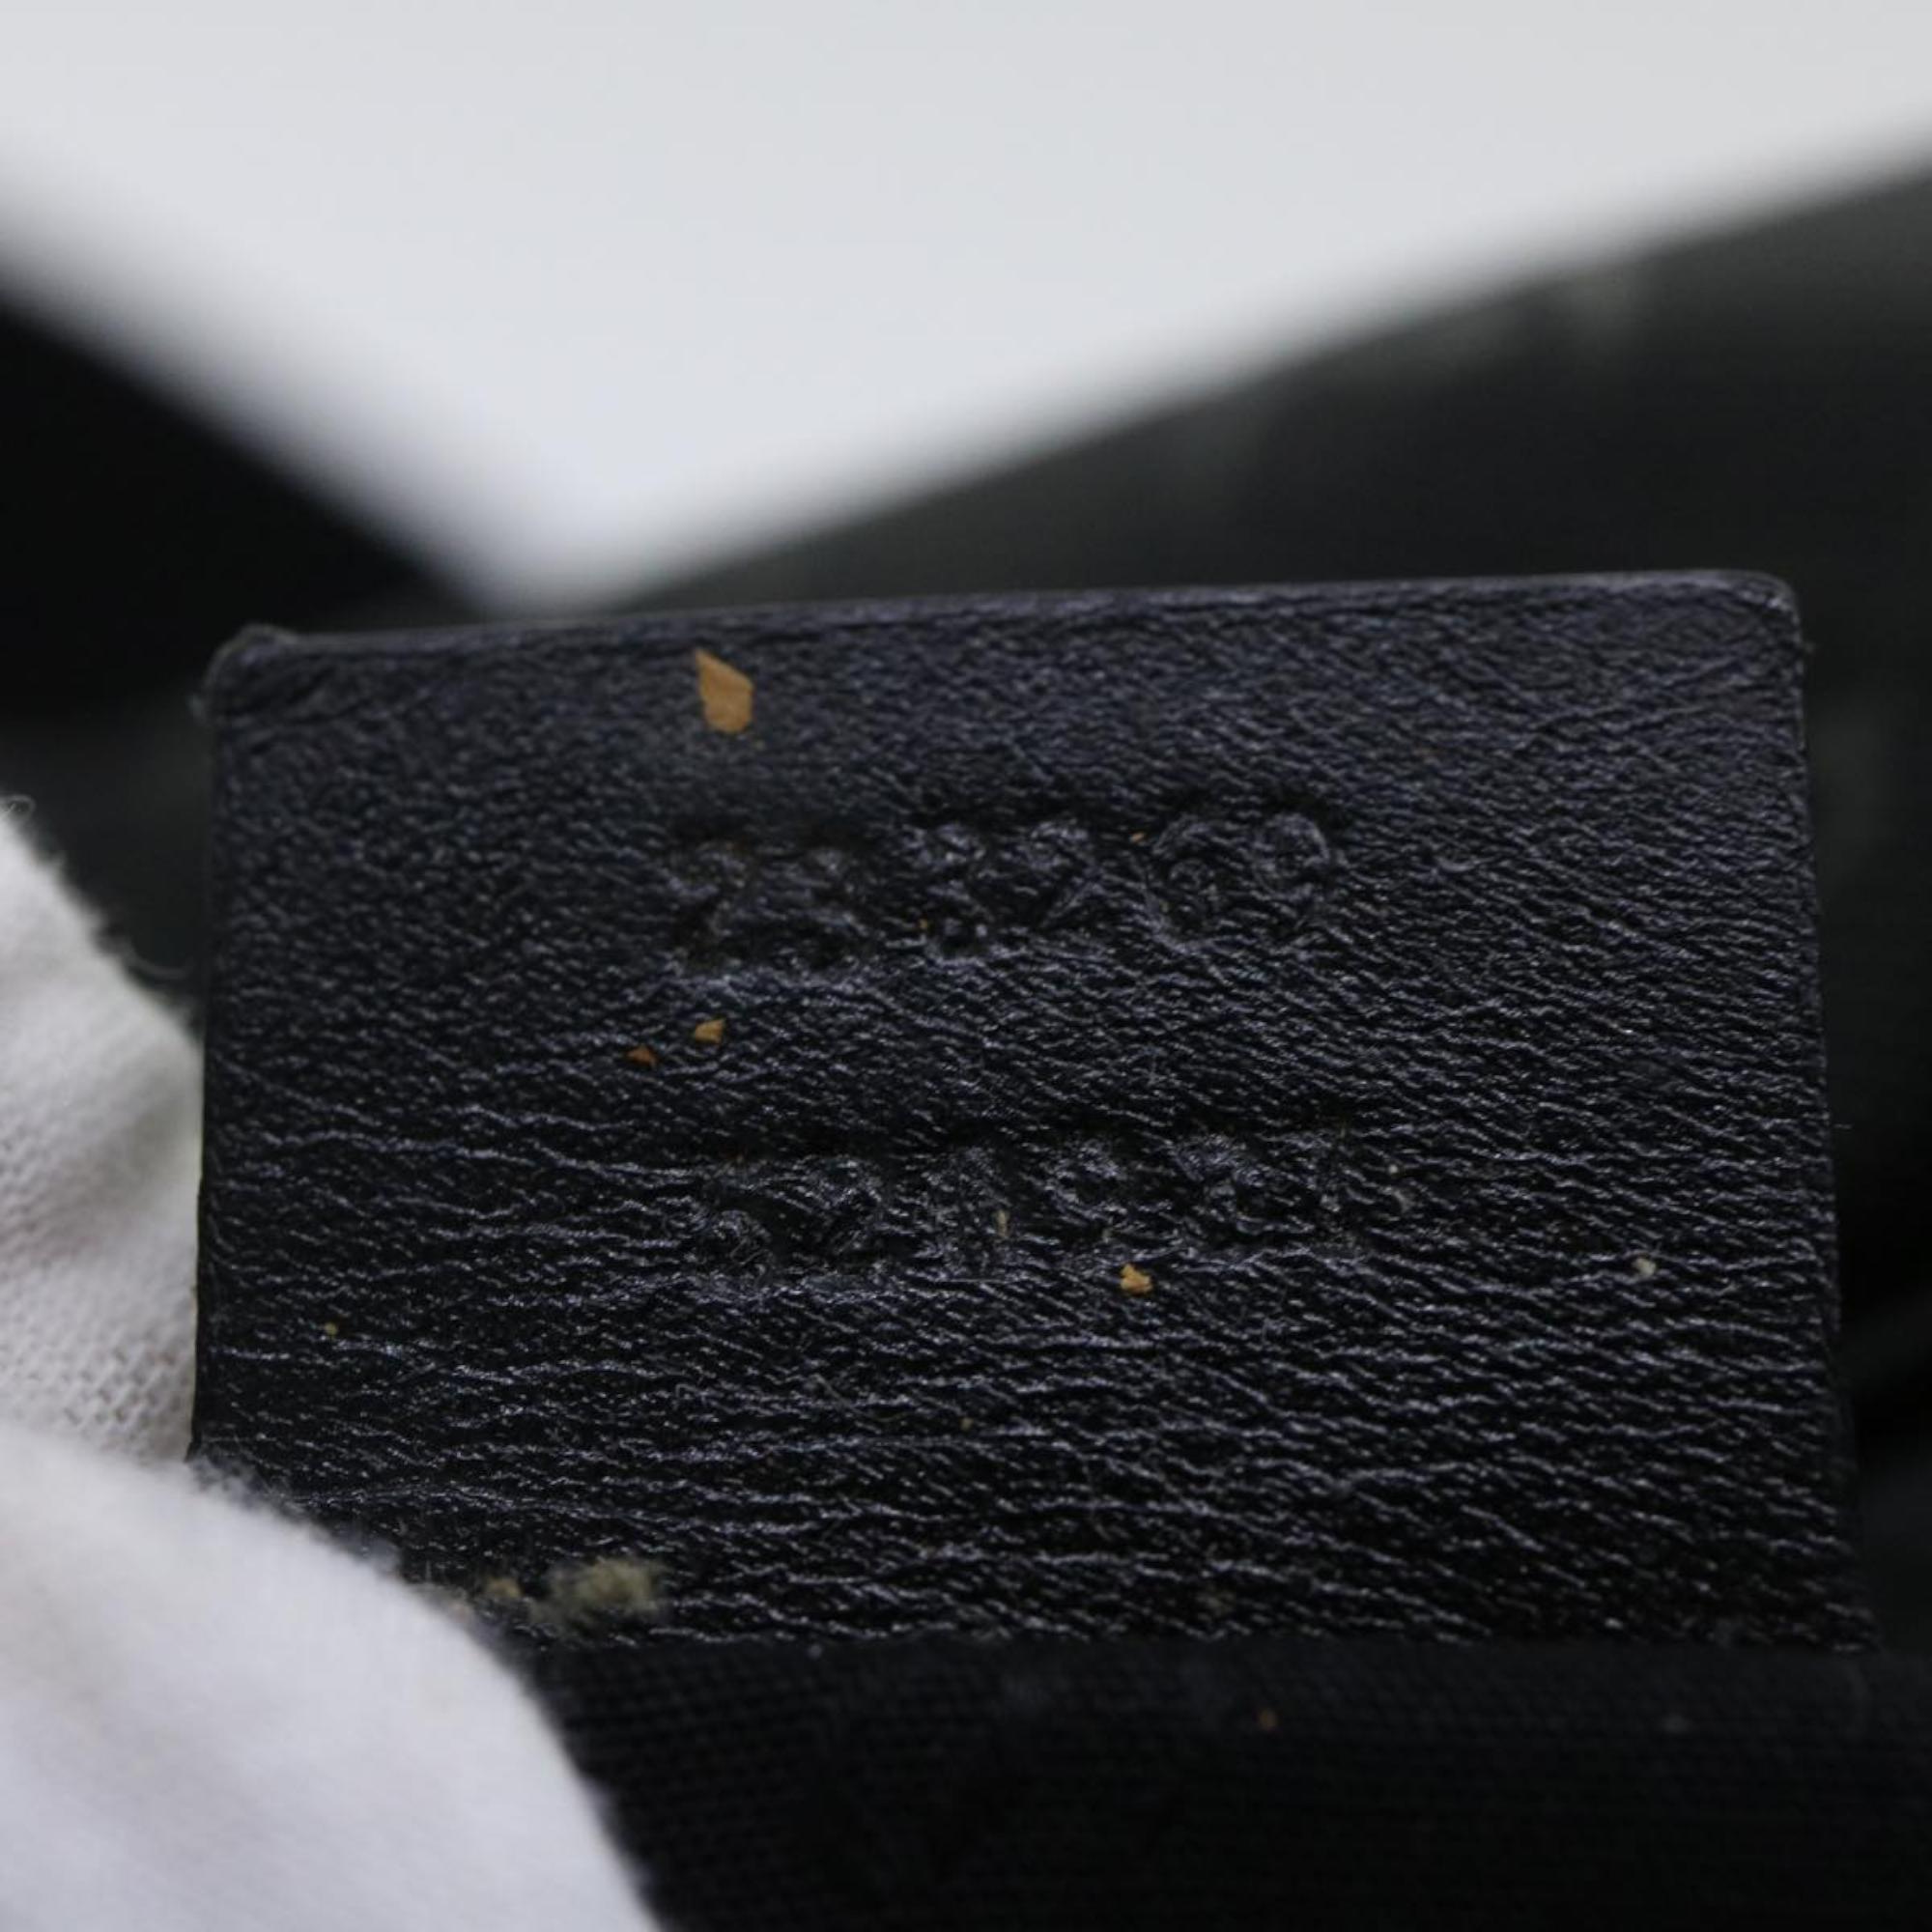 Gucci Black PVC GG Imprimé Belt Bag